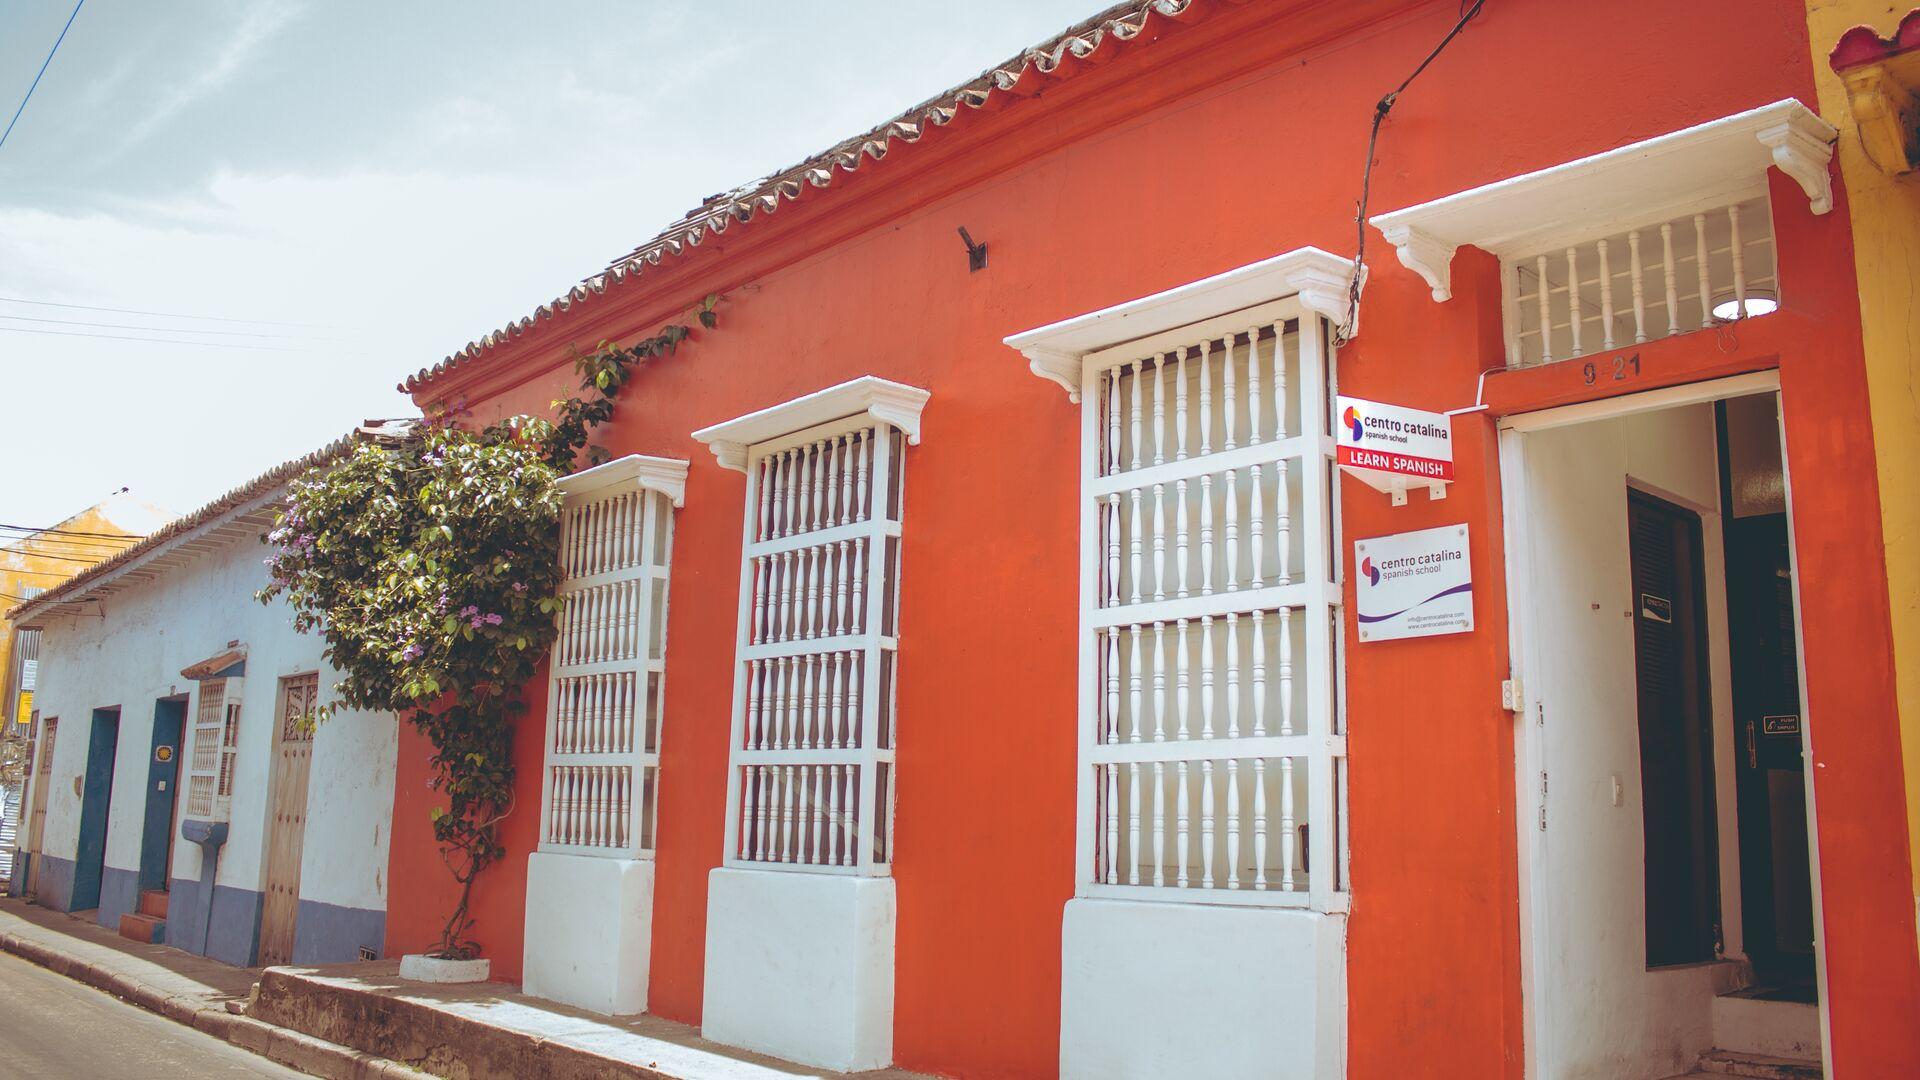 Sprachaufenthalt Kolumbien - Cartagena - Centro Catalina Cartagena - Schule